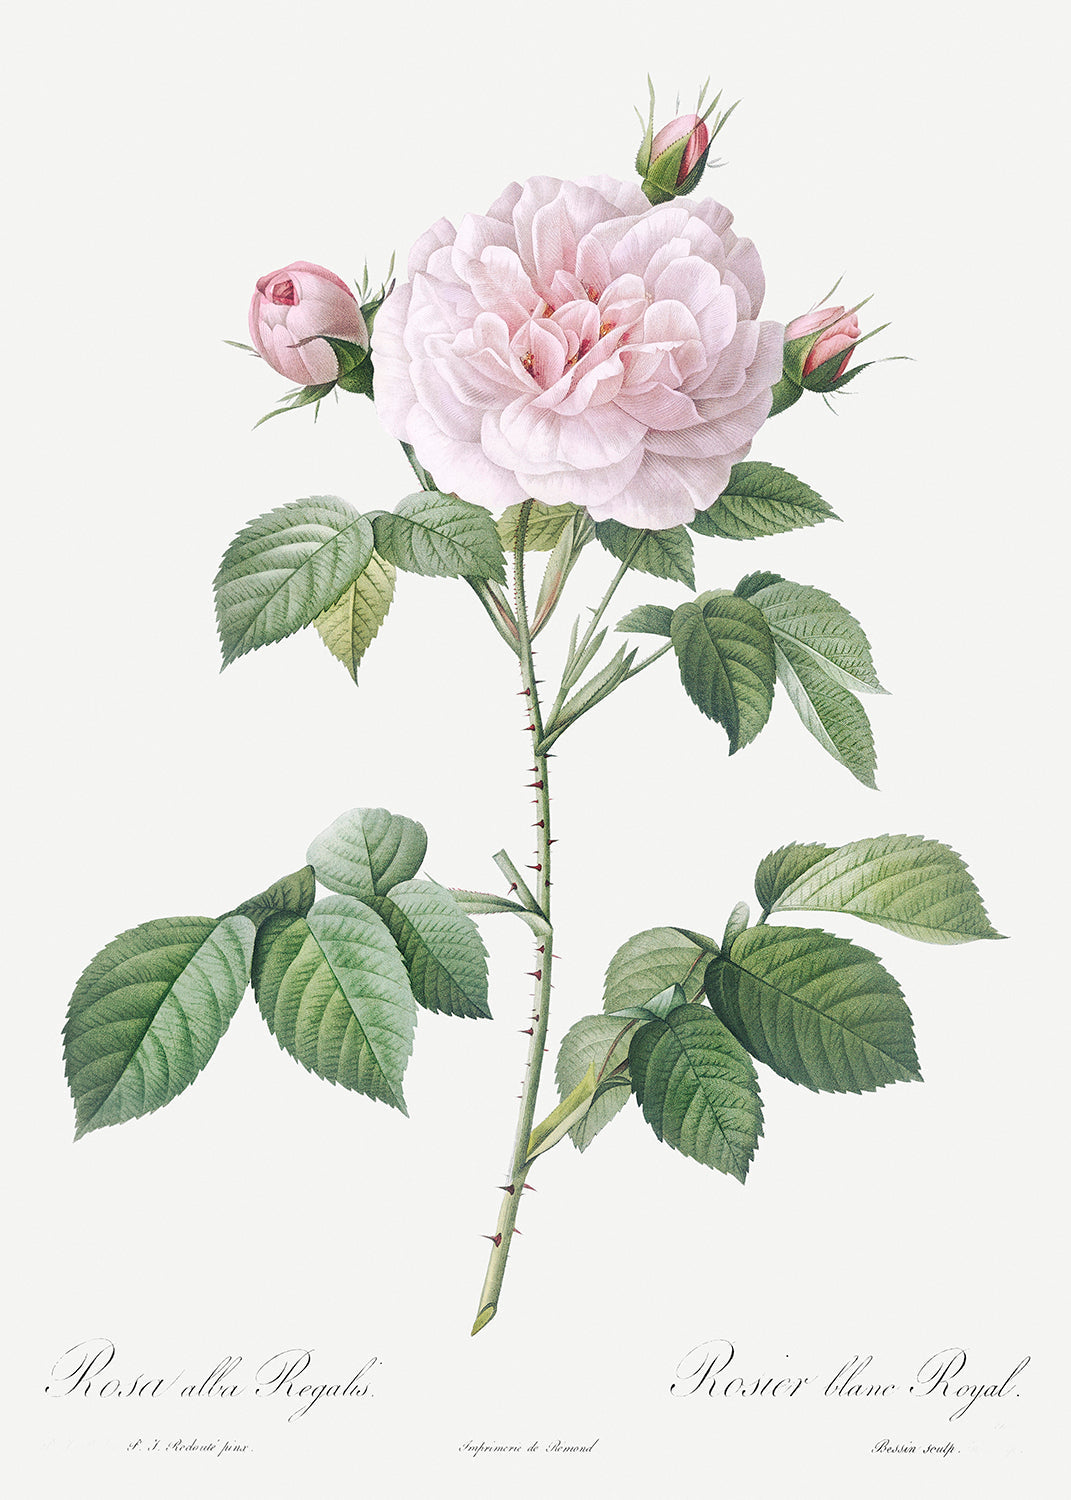 Botanical Plant Print - Royal White Rose, Rosa alba regalis by Pierre Joseph Redoute